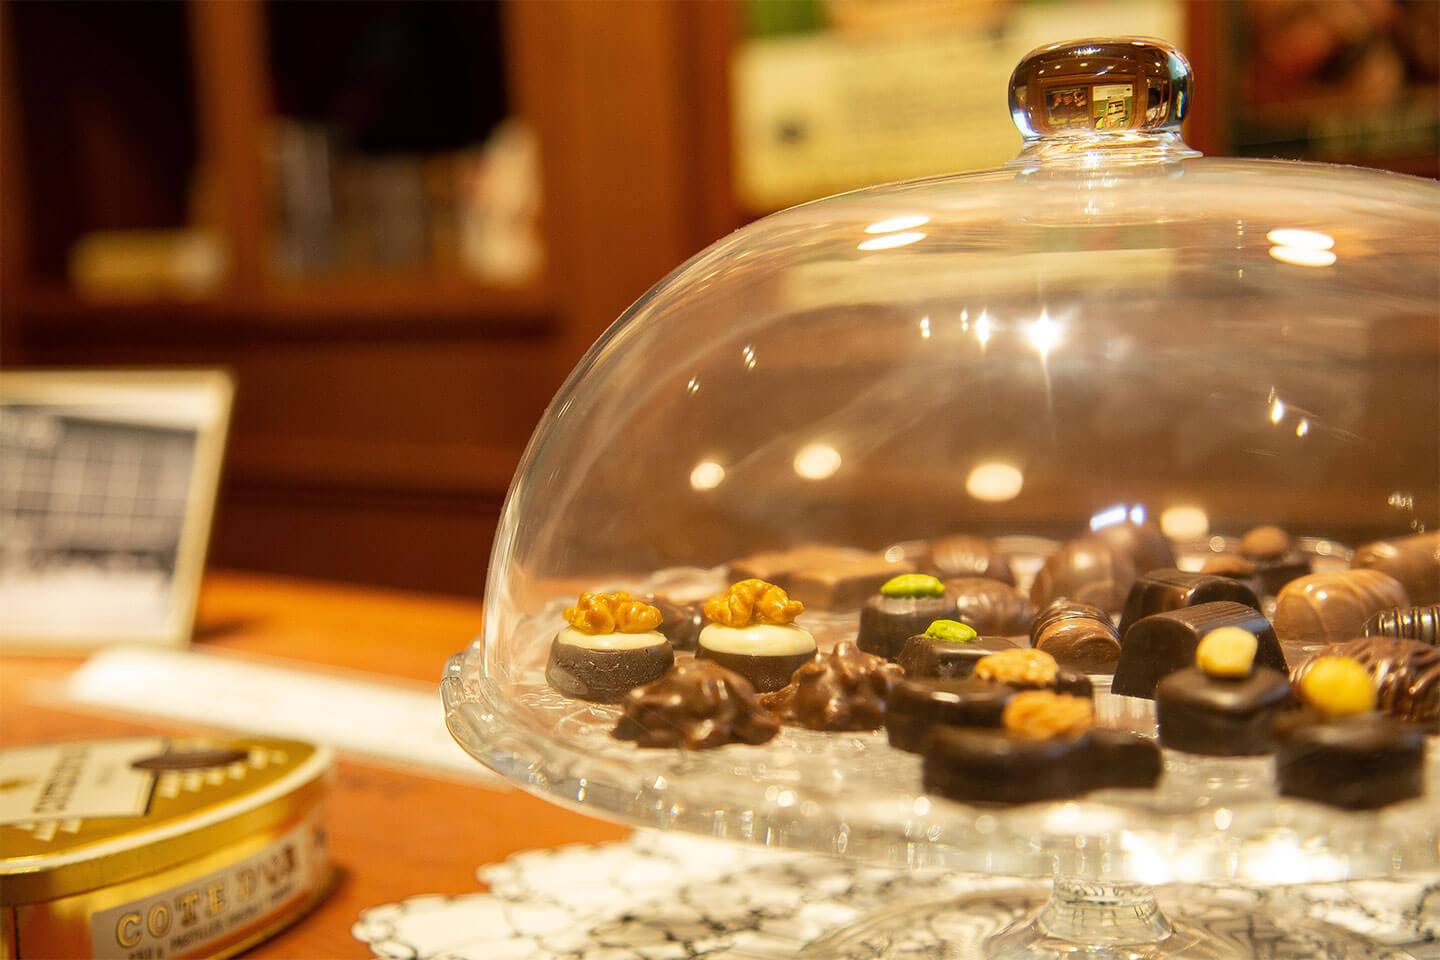 Aesthetic display of chocolates